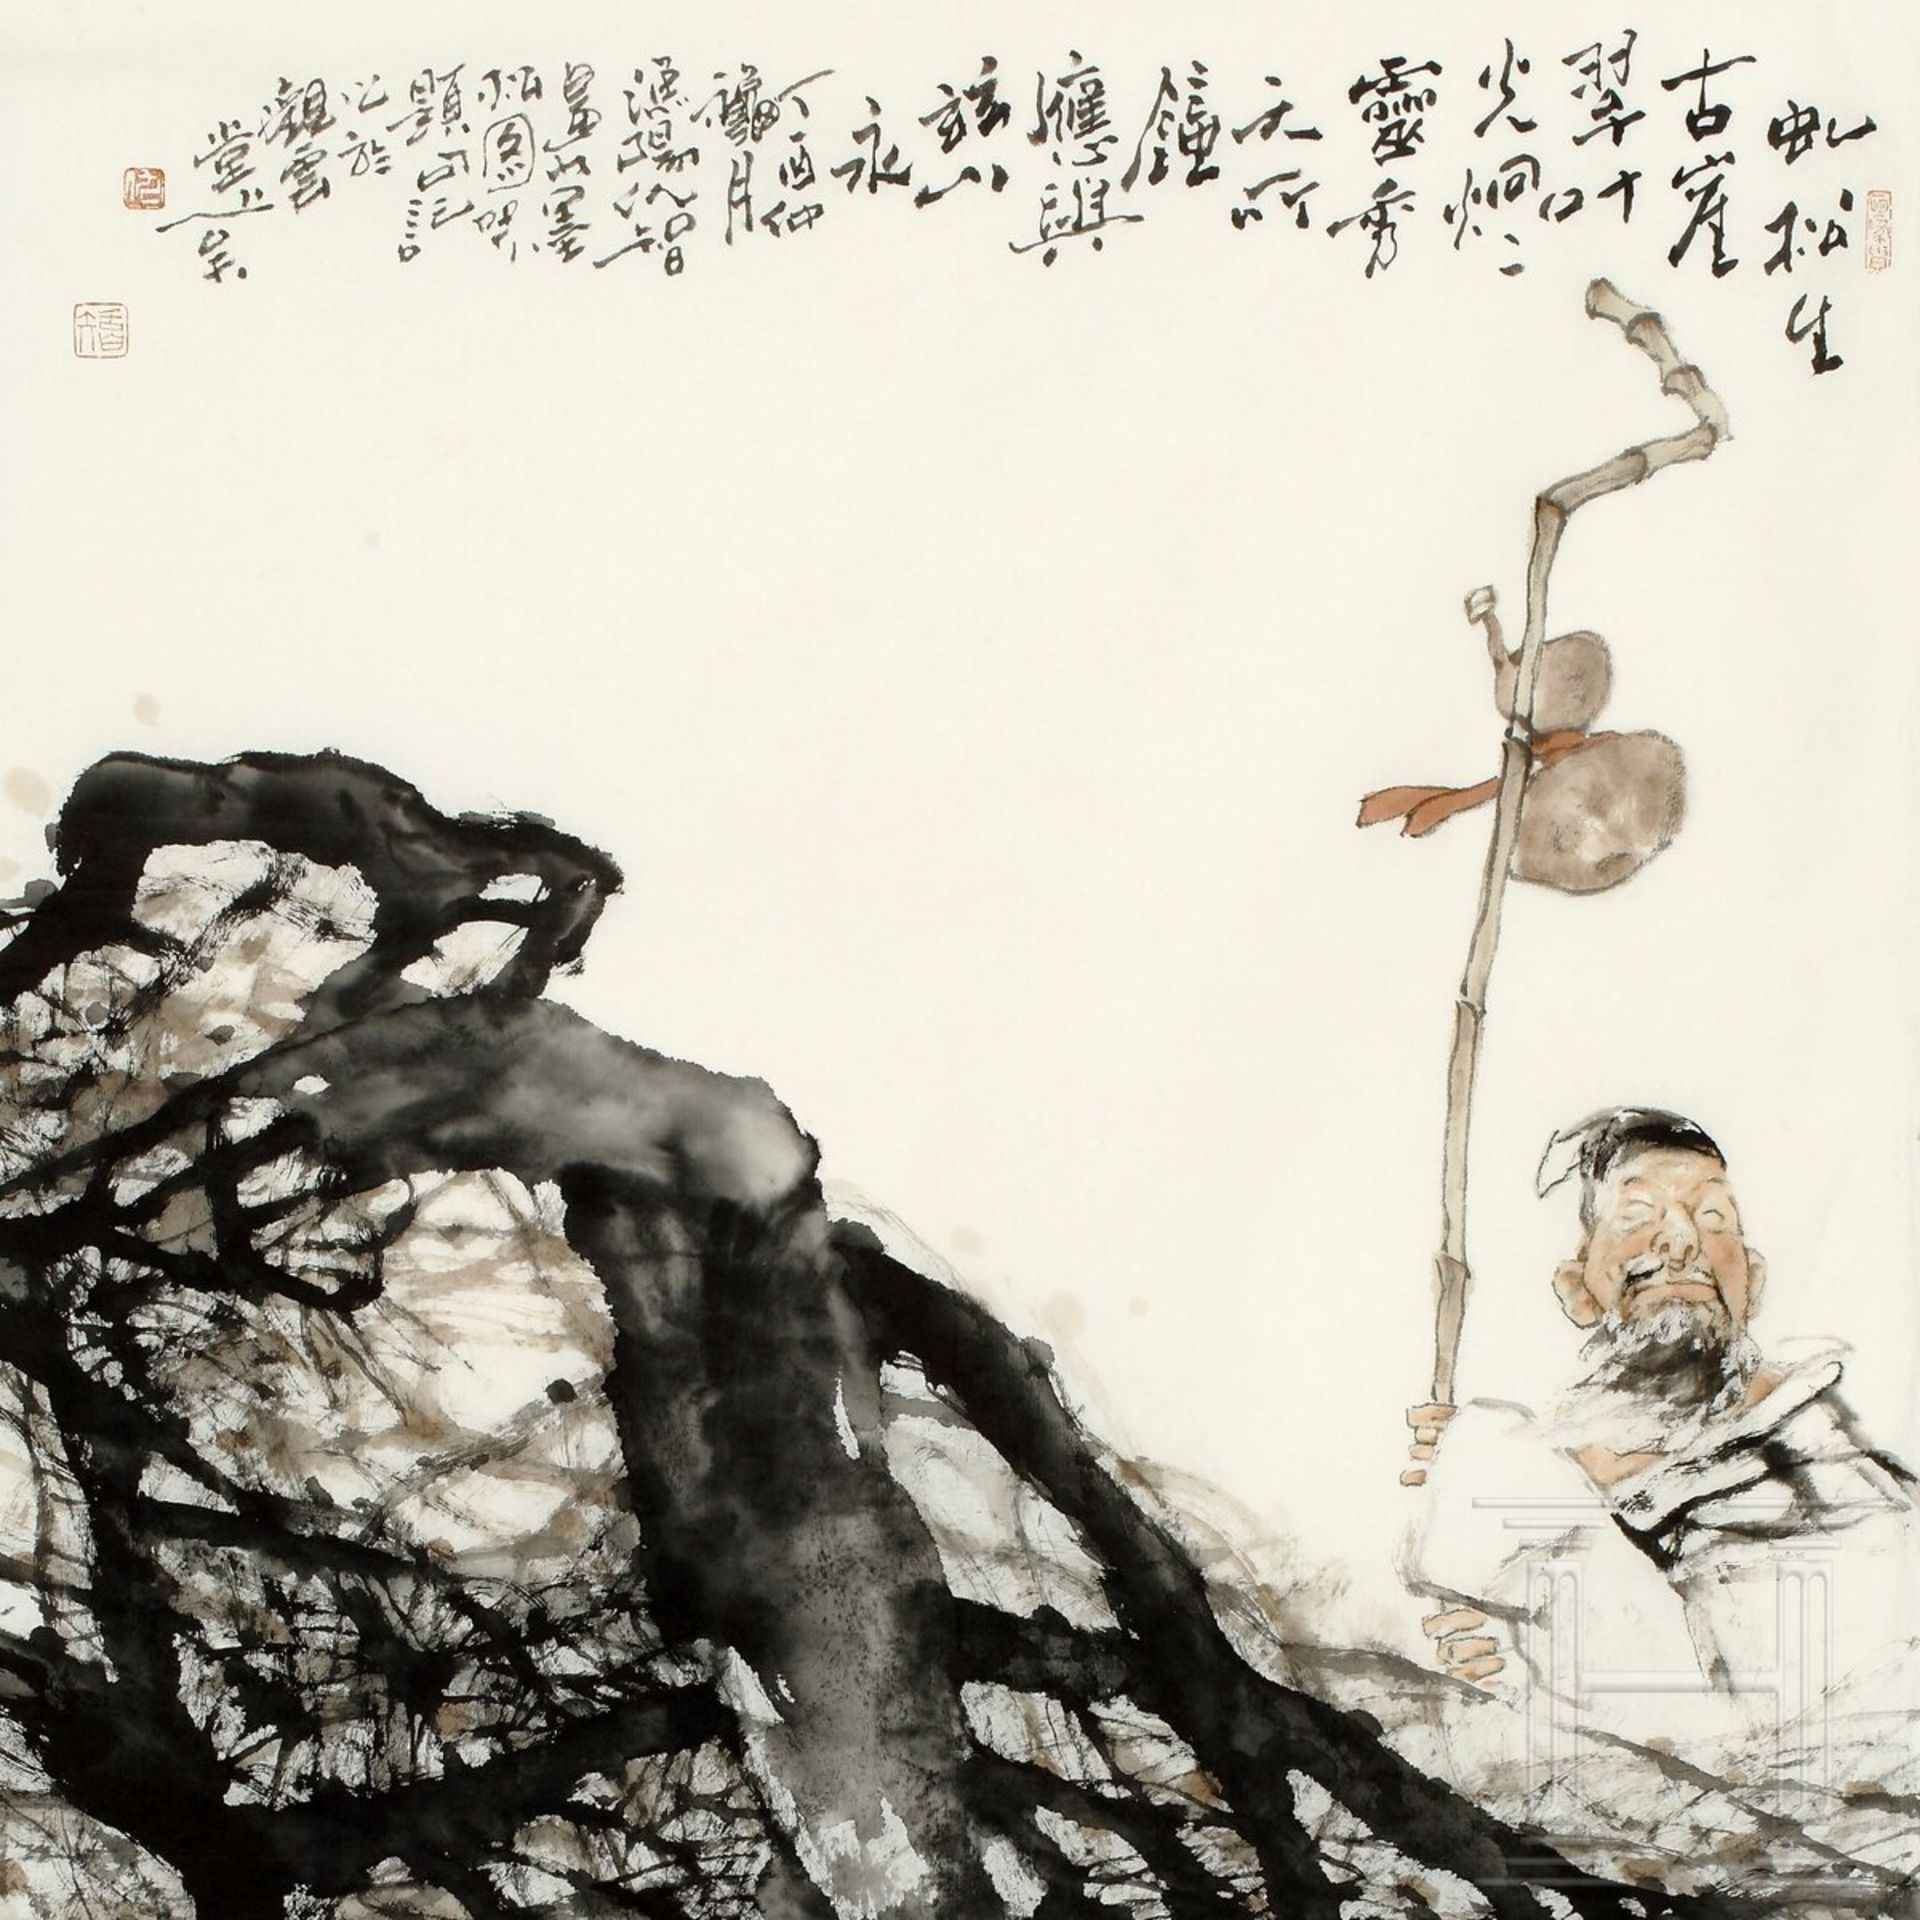 Qiu HongZhi (*1968) - "Frag' den Meister", China - Image 2 of 2